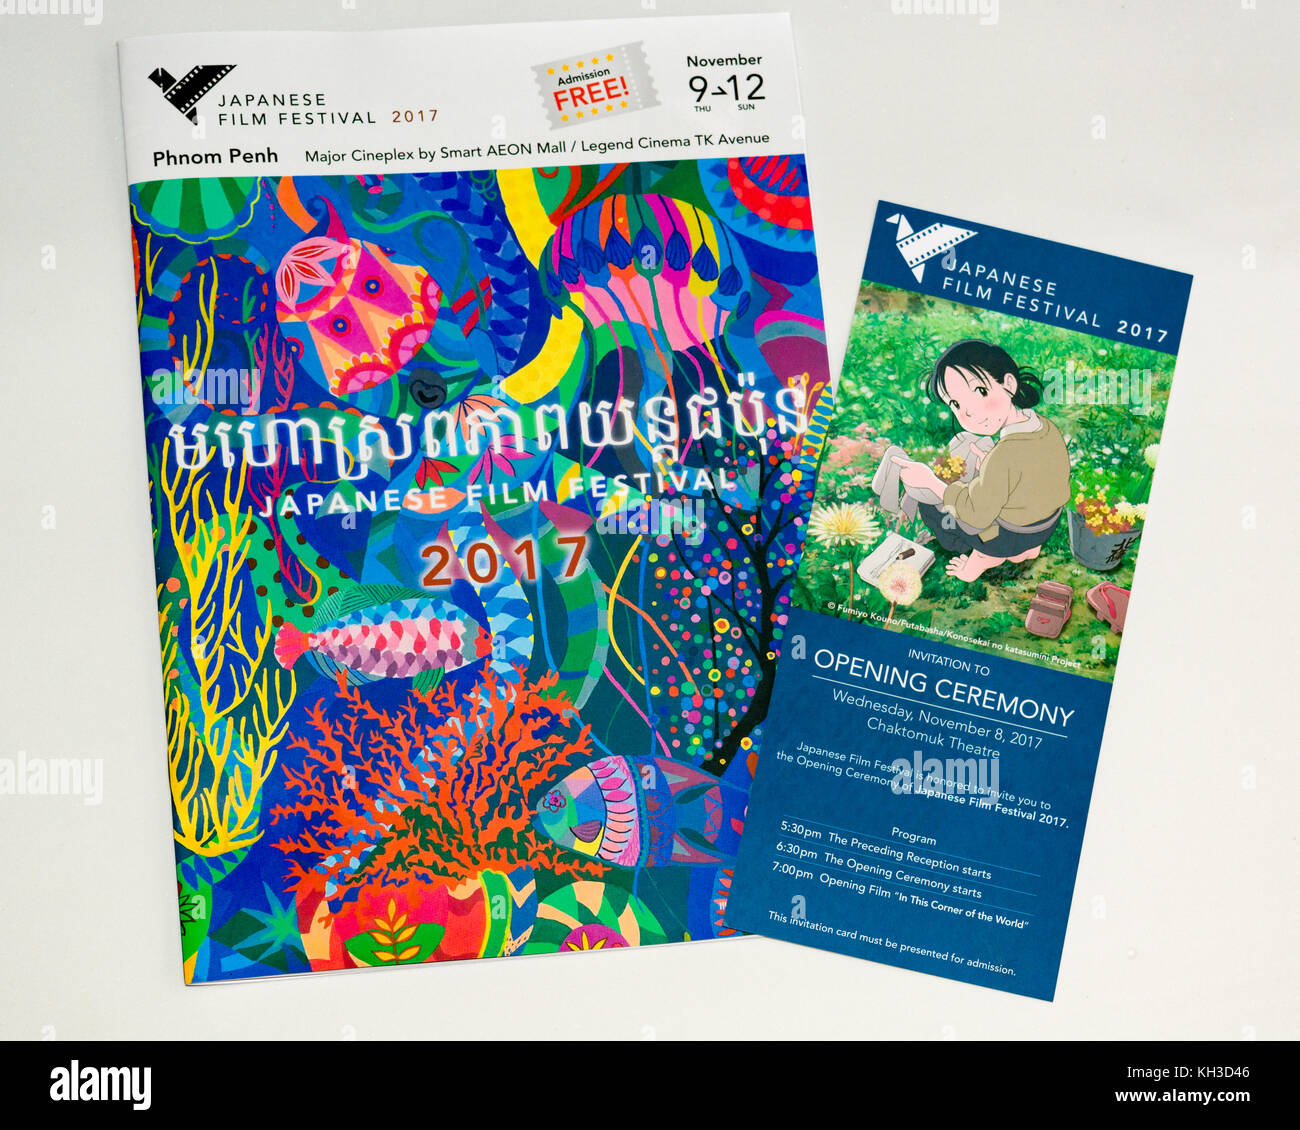 Festival handbook and opening cermony invitation card for Japanese Film Festival 2017 in Phnom Penh, Cambodia. It features illustration titled 'Aquari Stock Photo